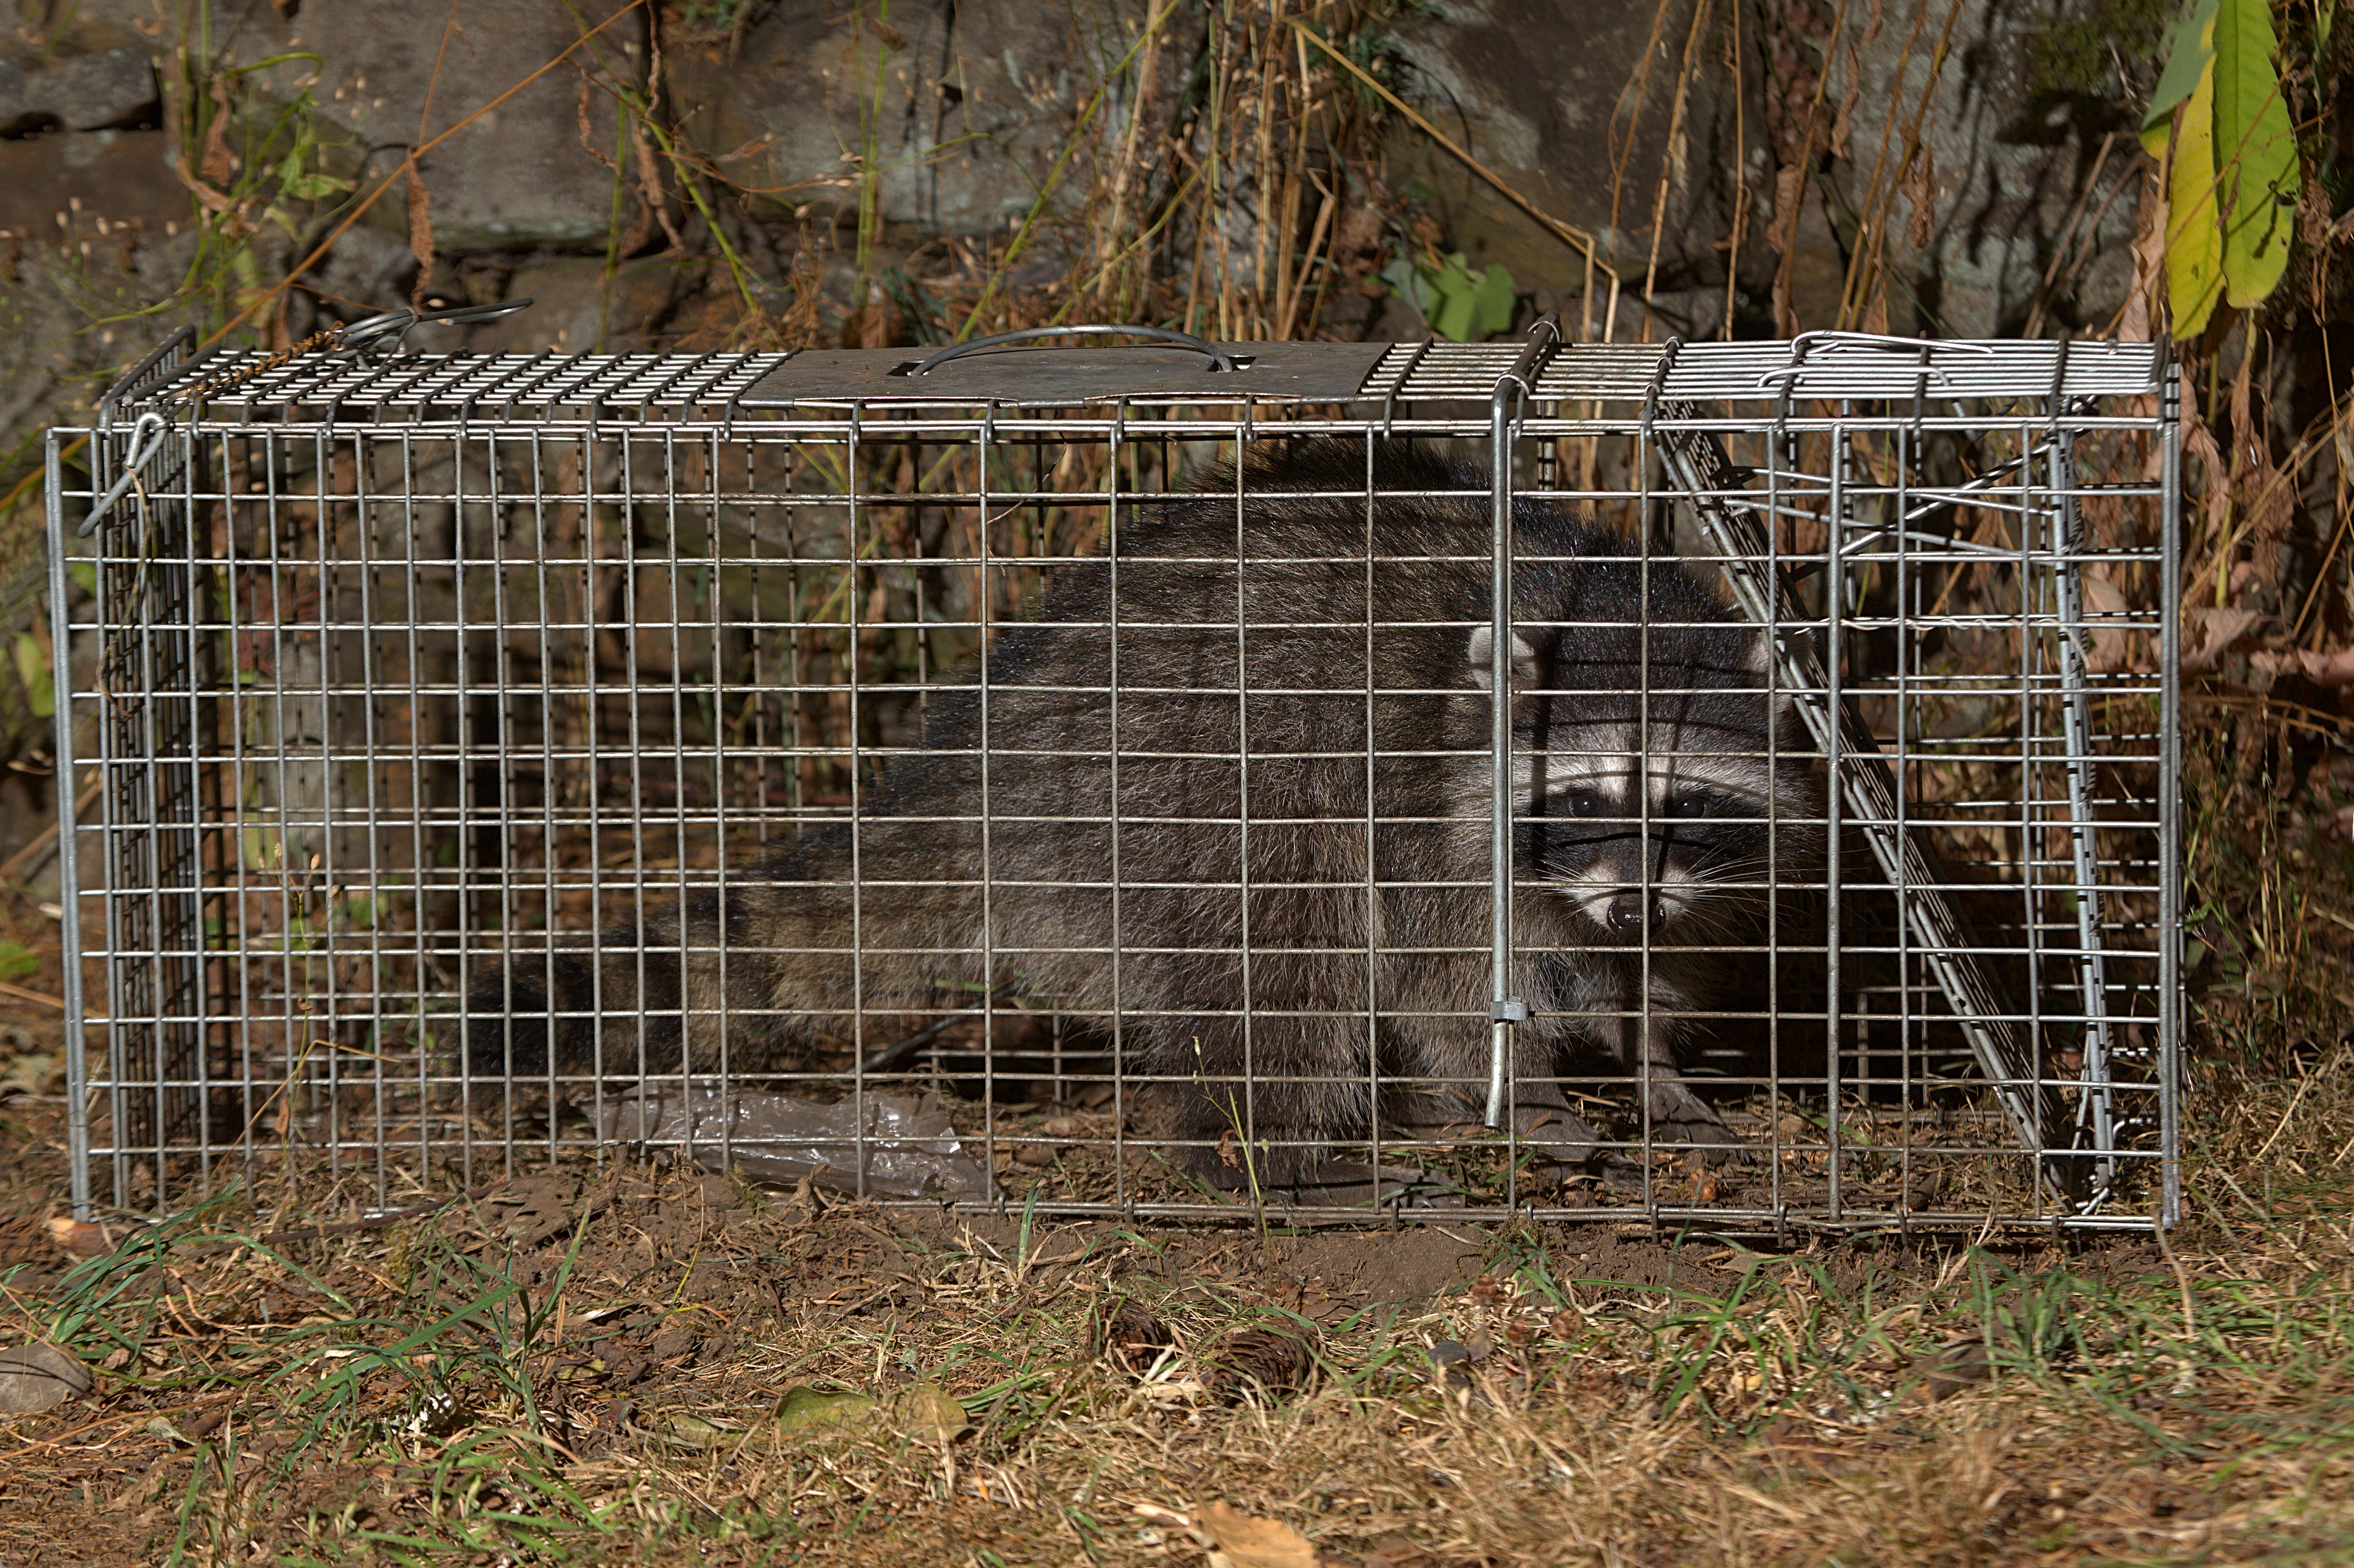 https://wildlifehelp.org/sites/default/files/images/steps/Raccoon_in_box_trap_Keith_Szafranski.jpg